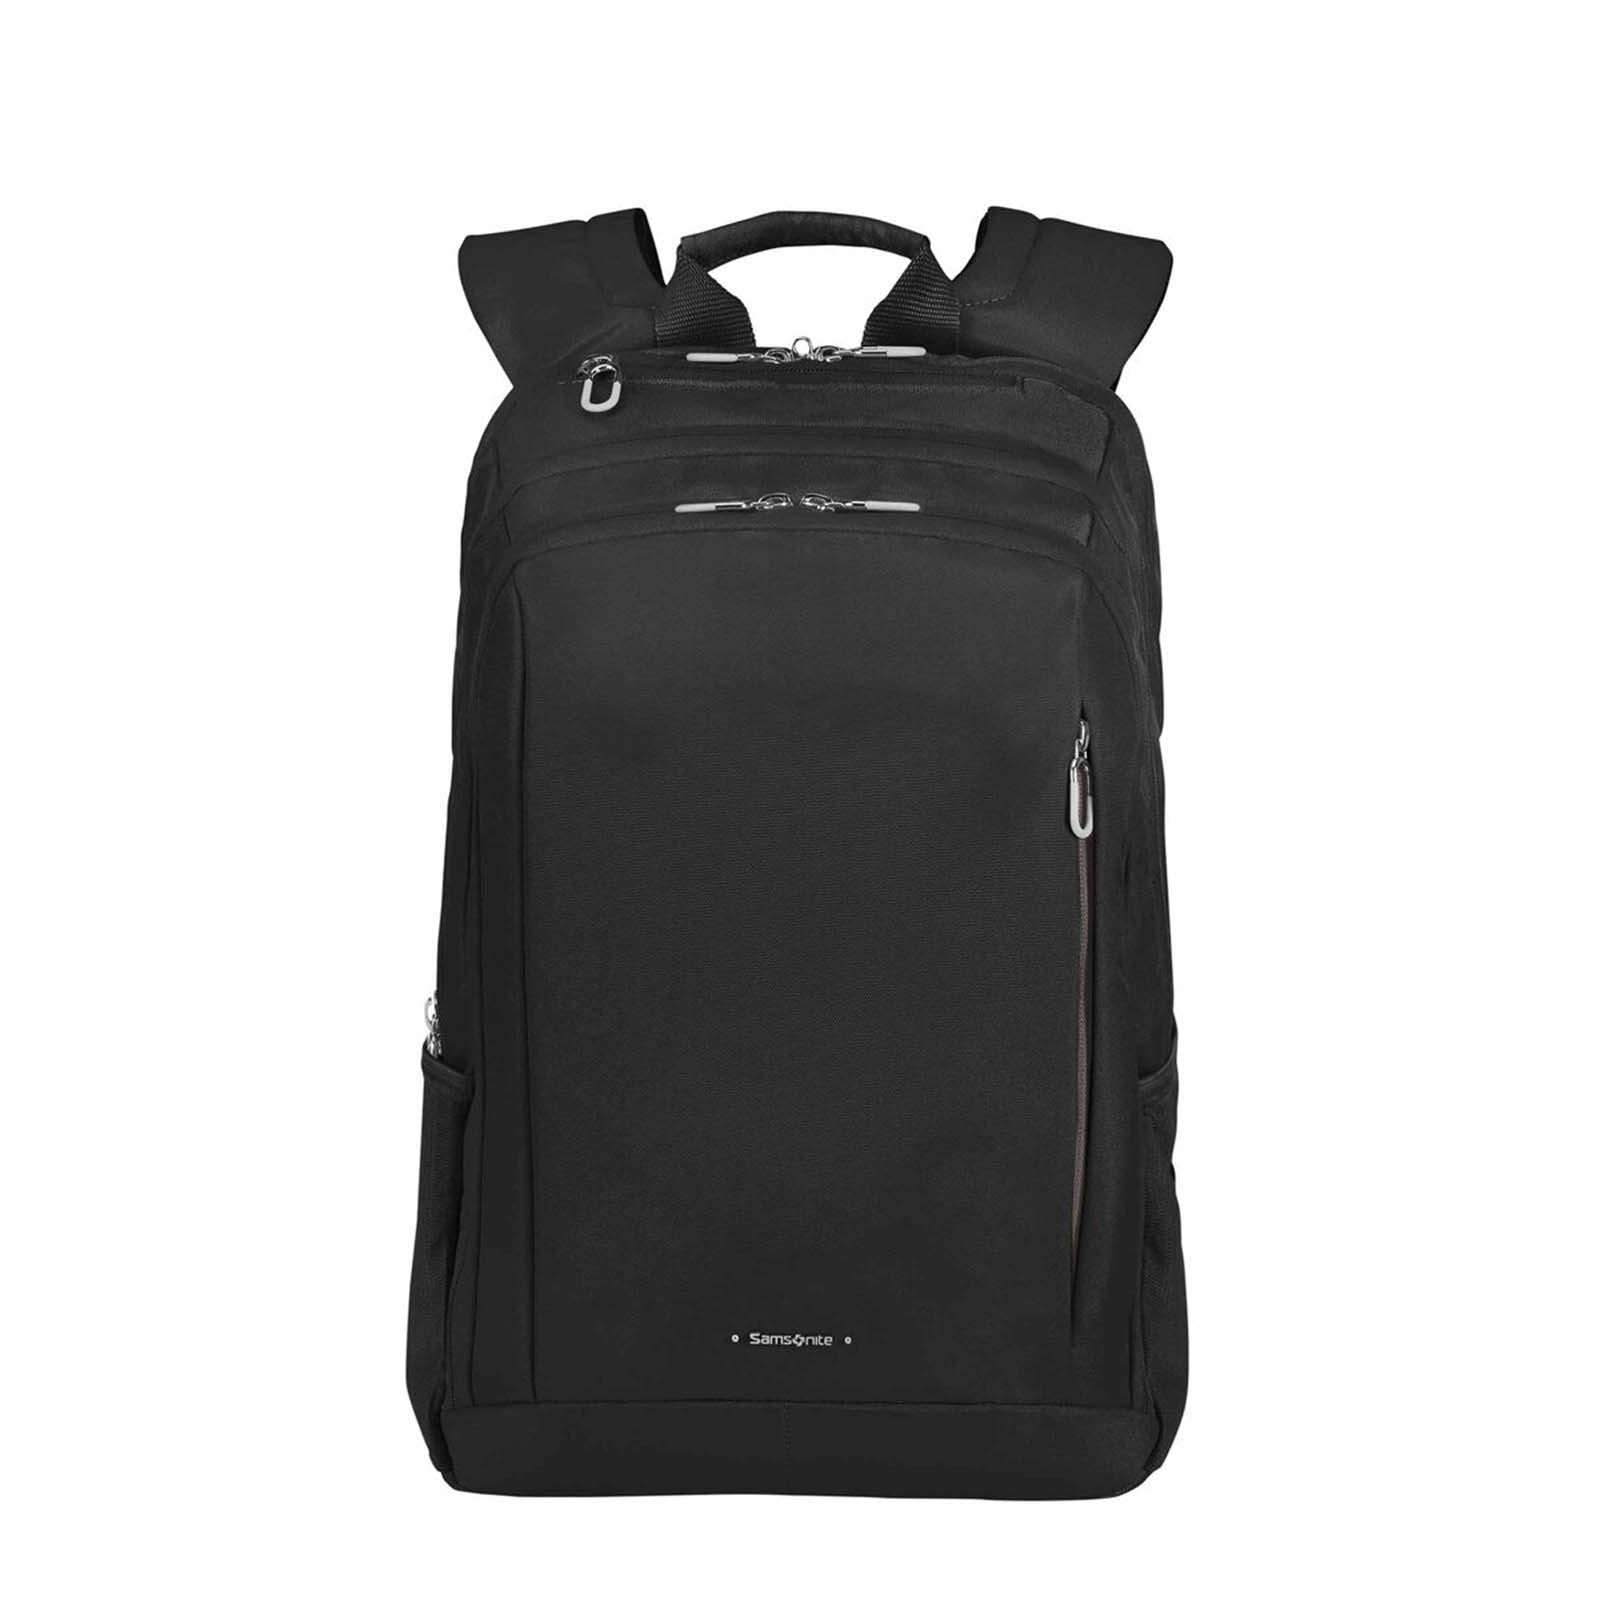 Samsonite-Guardit-Classy-15-Inch-Laptop-Backpack-Black-Front